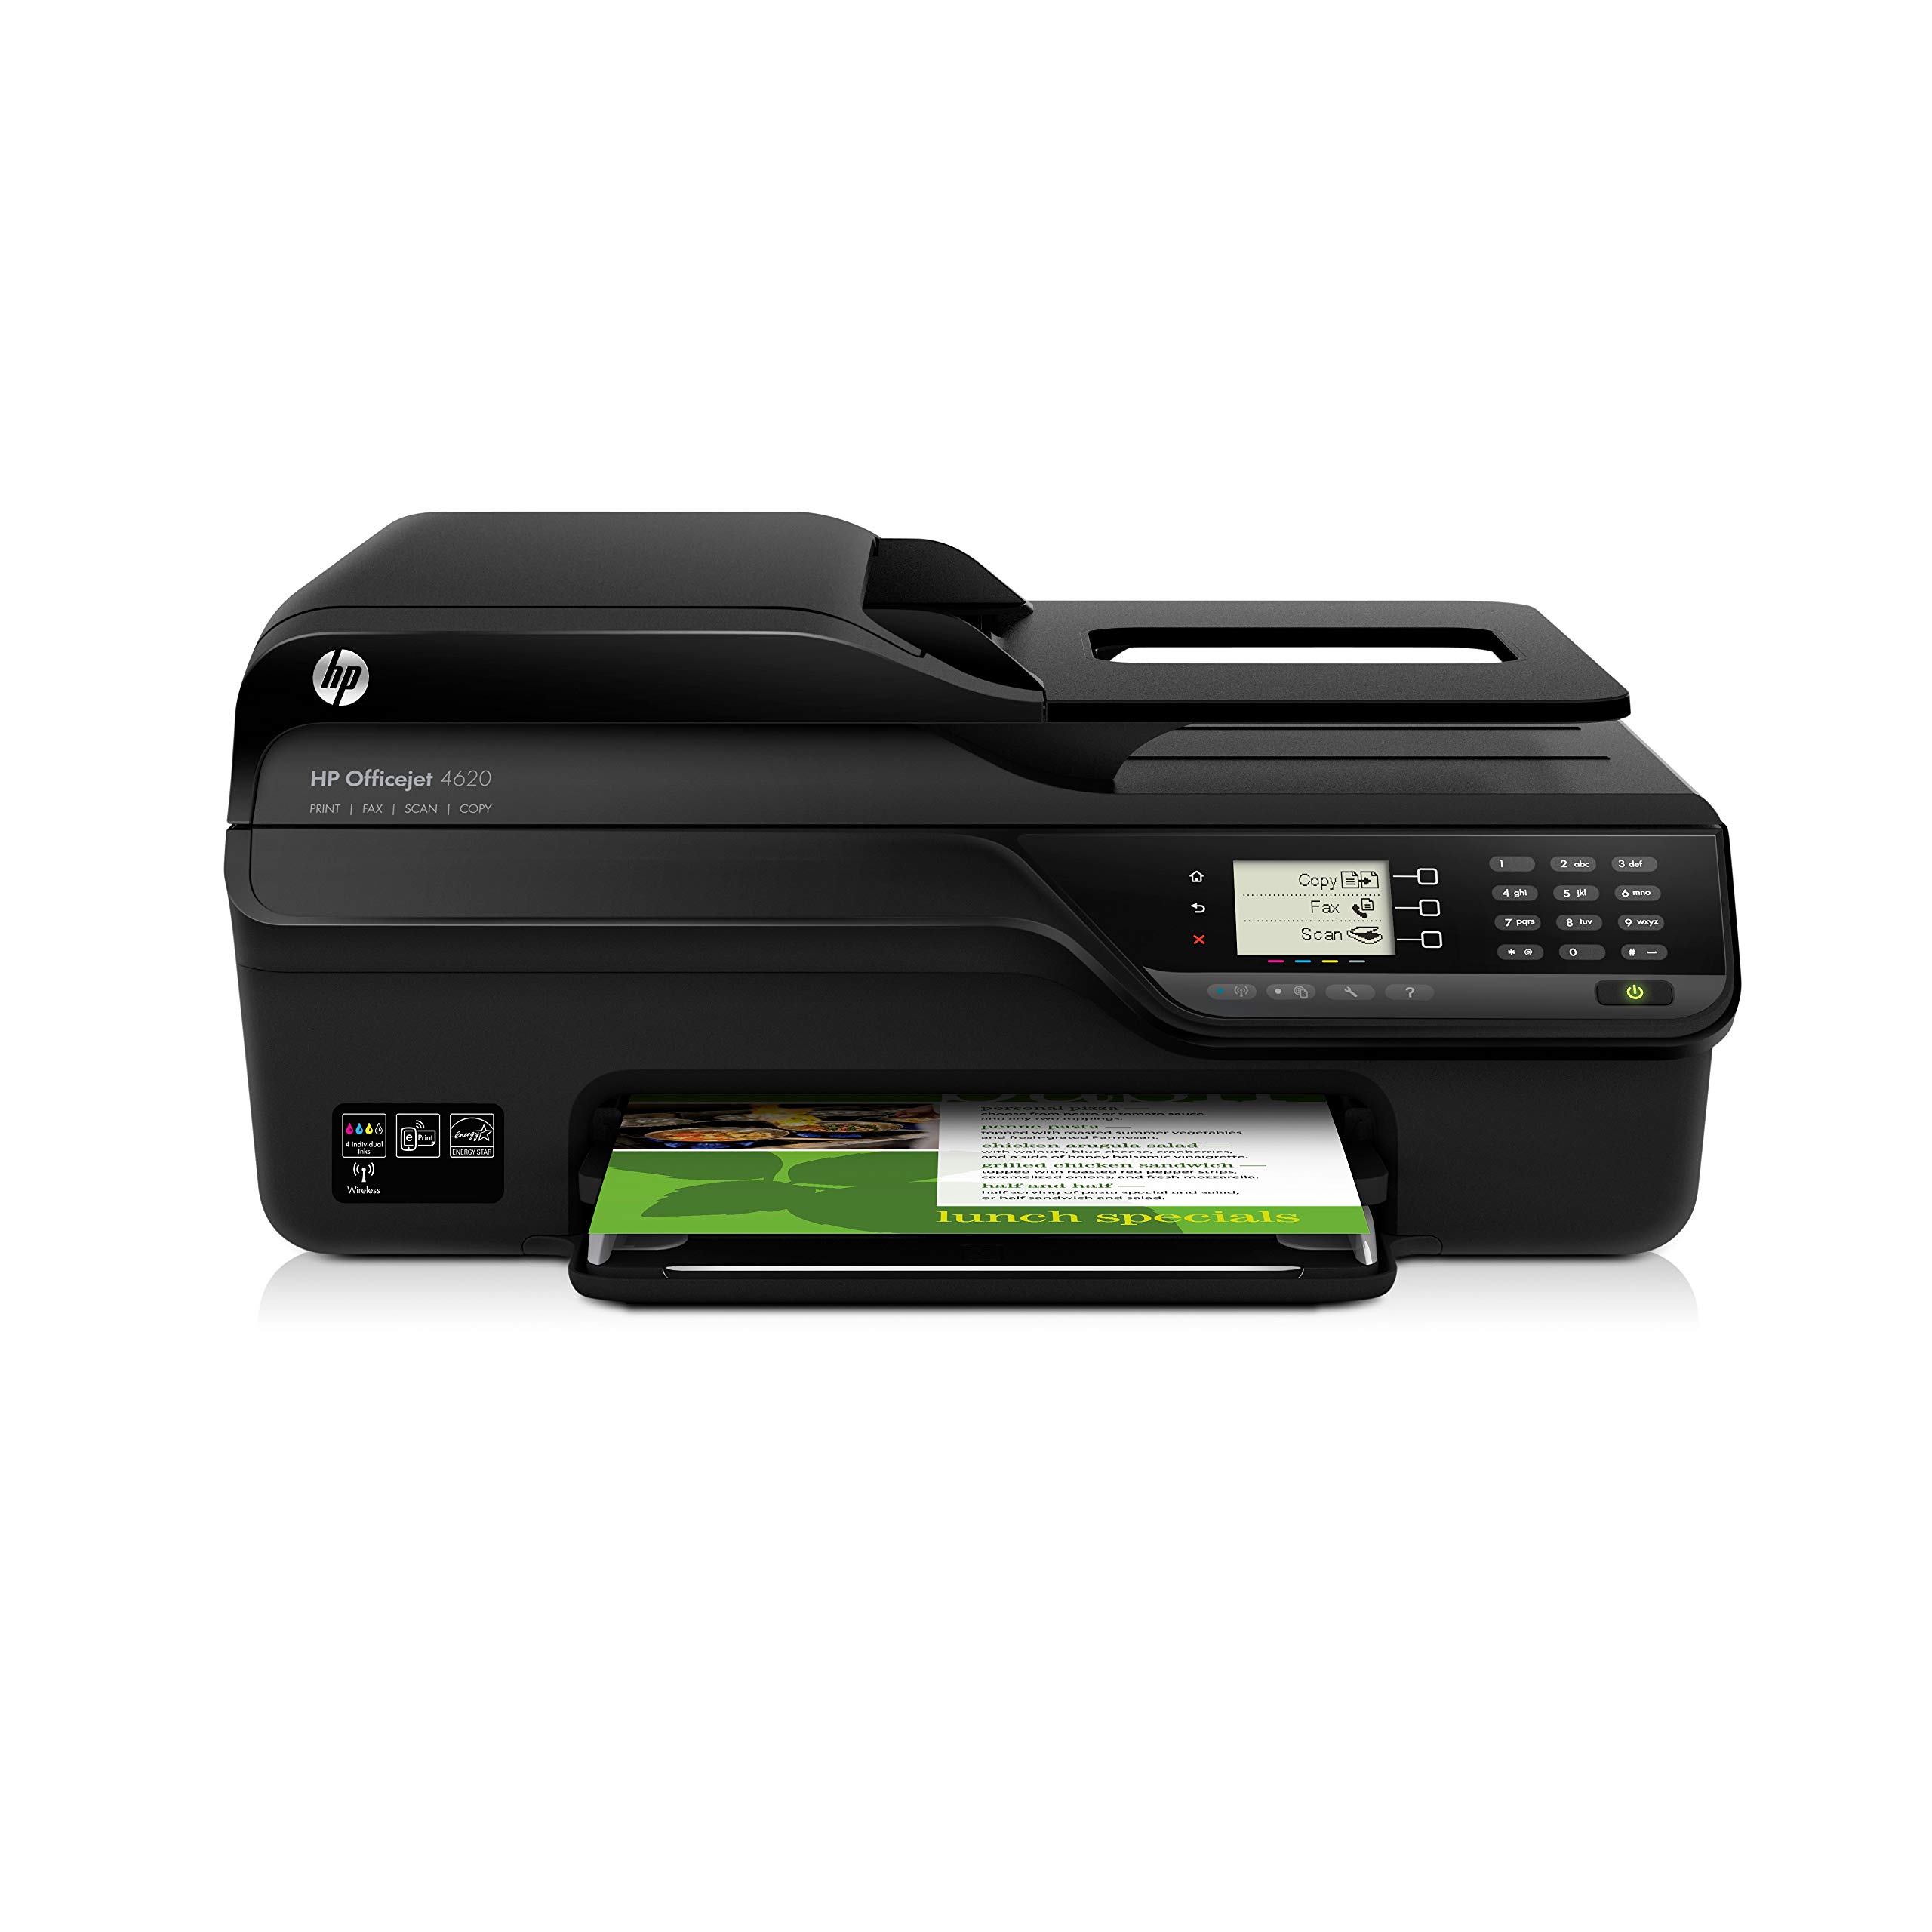 Deskjet Ink Advantage 4620 e-All-in-One Printer series